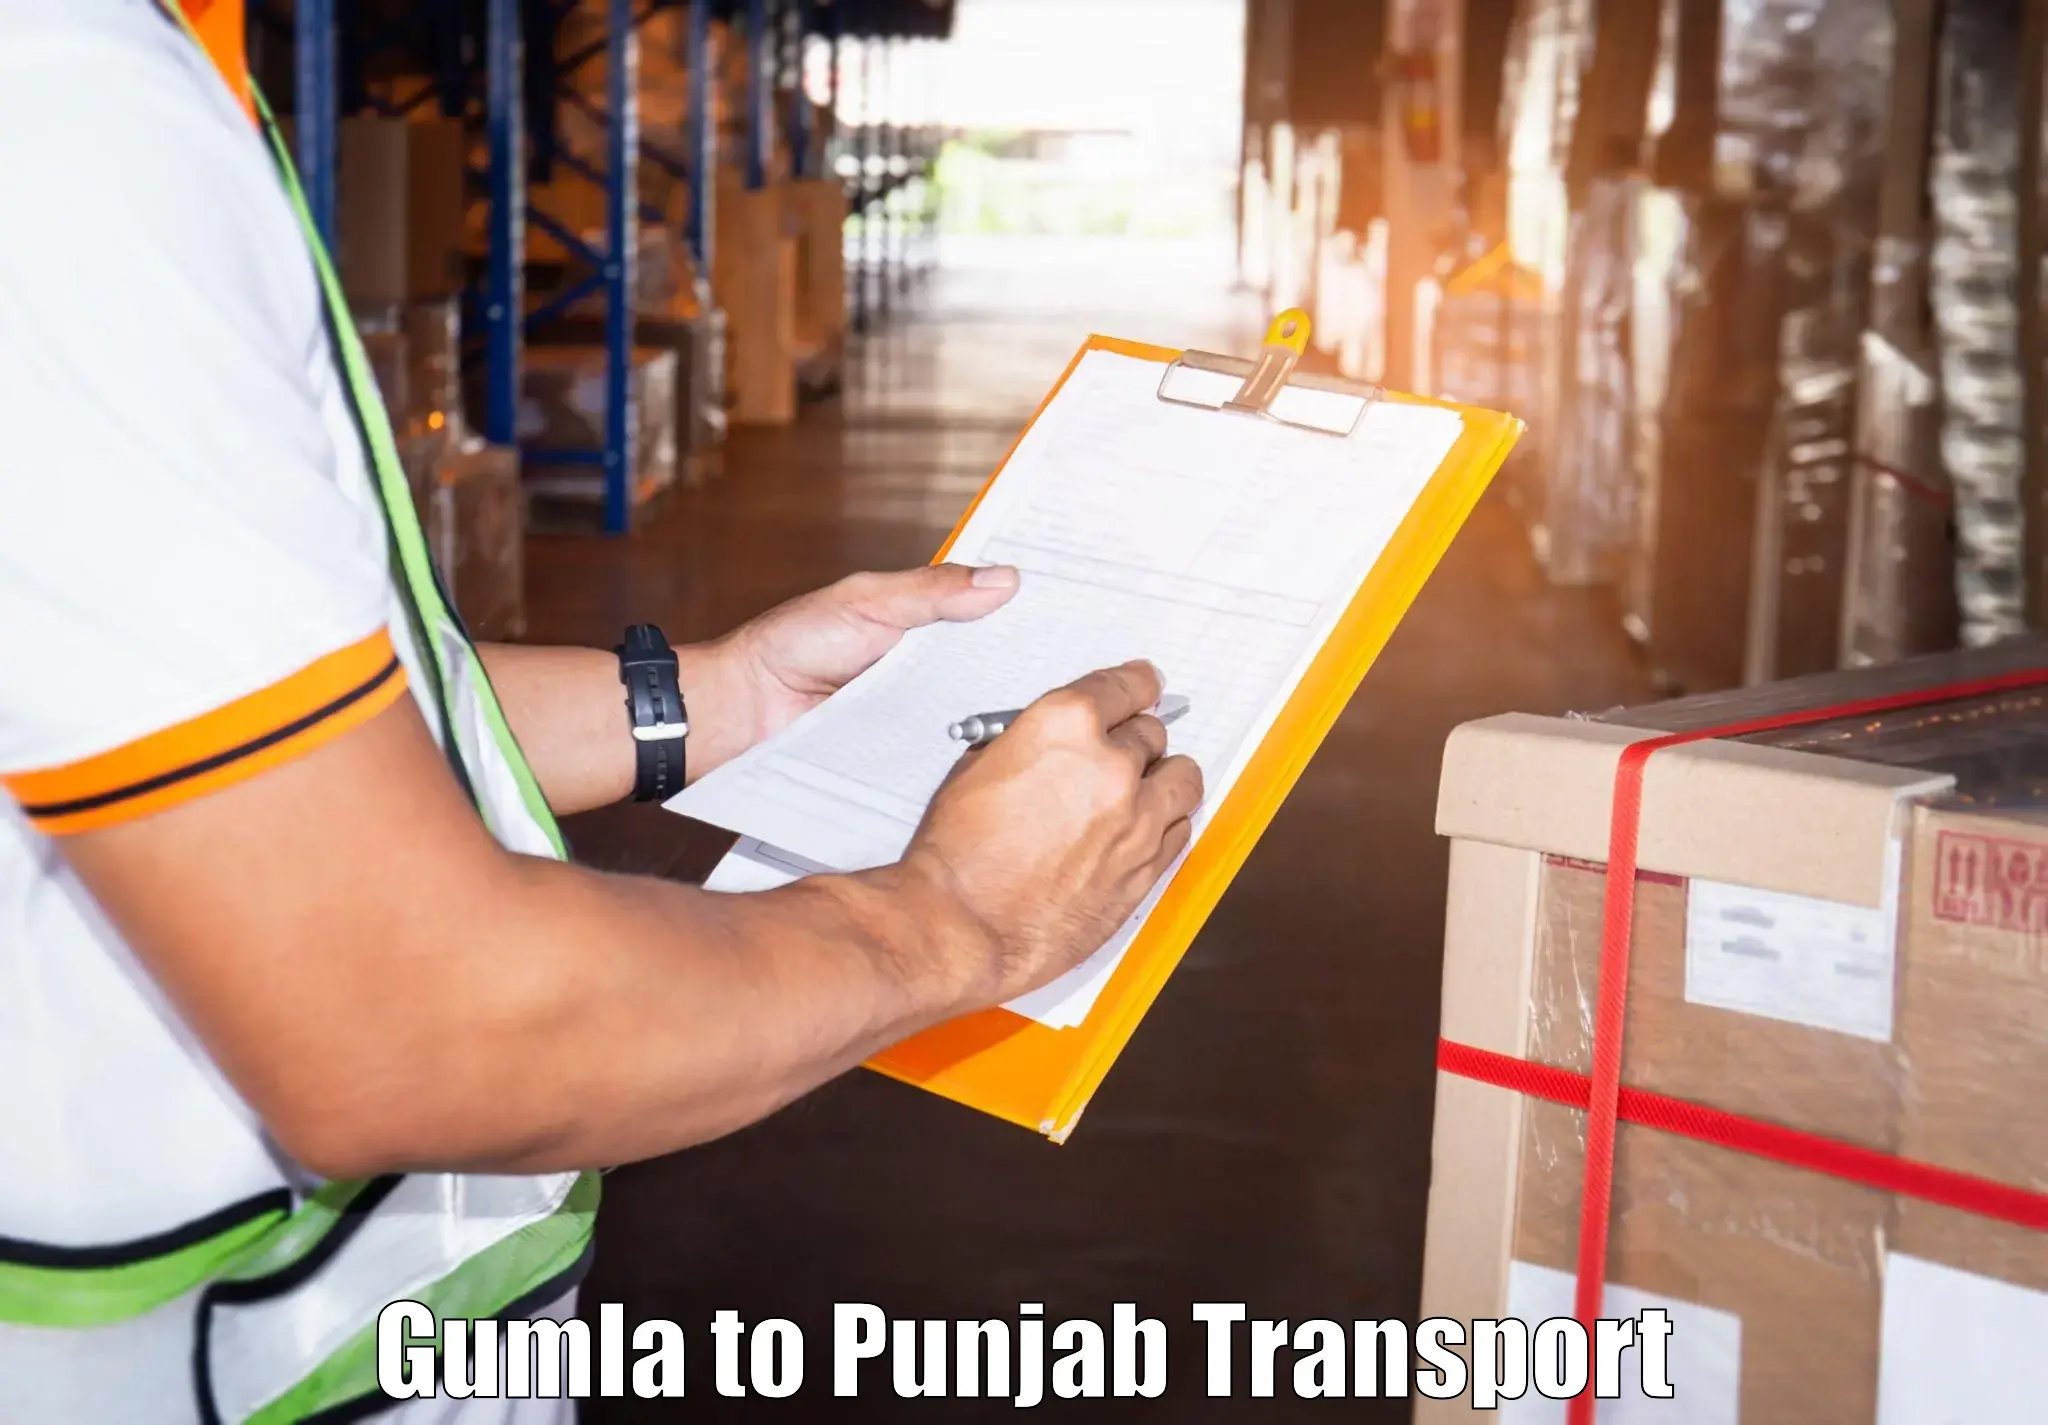 Delivery service Gumla to Patiala